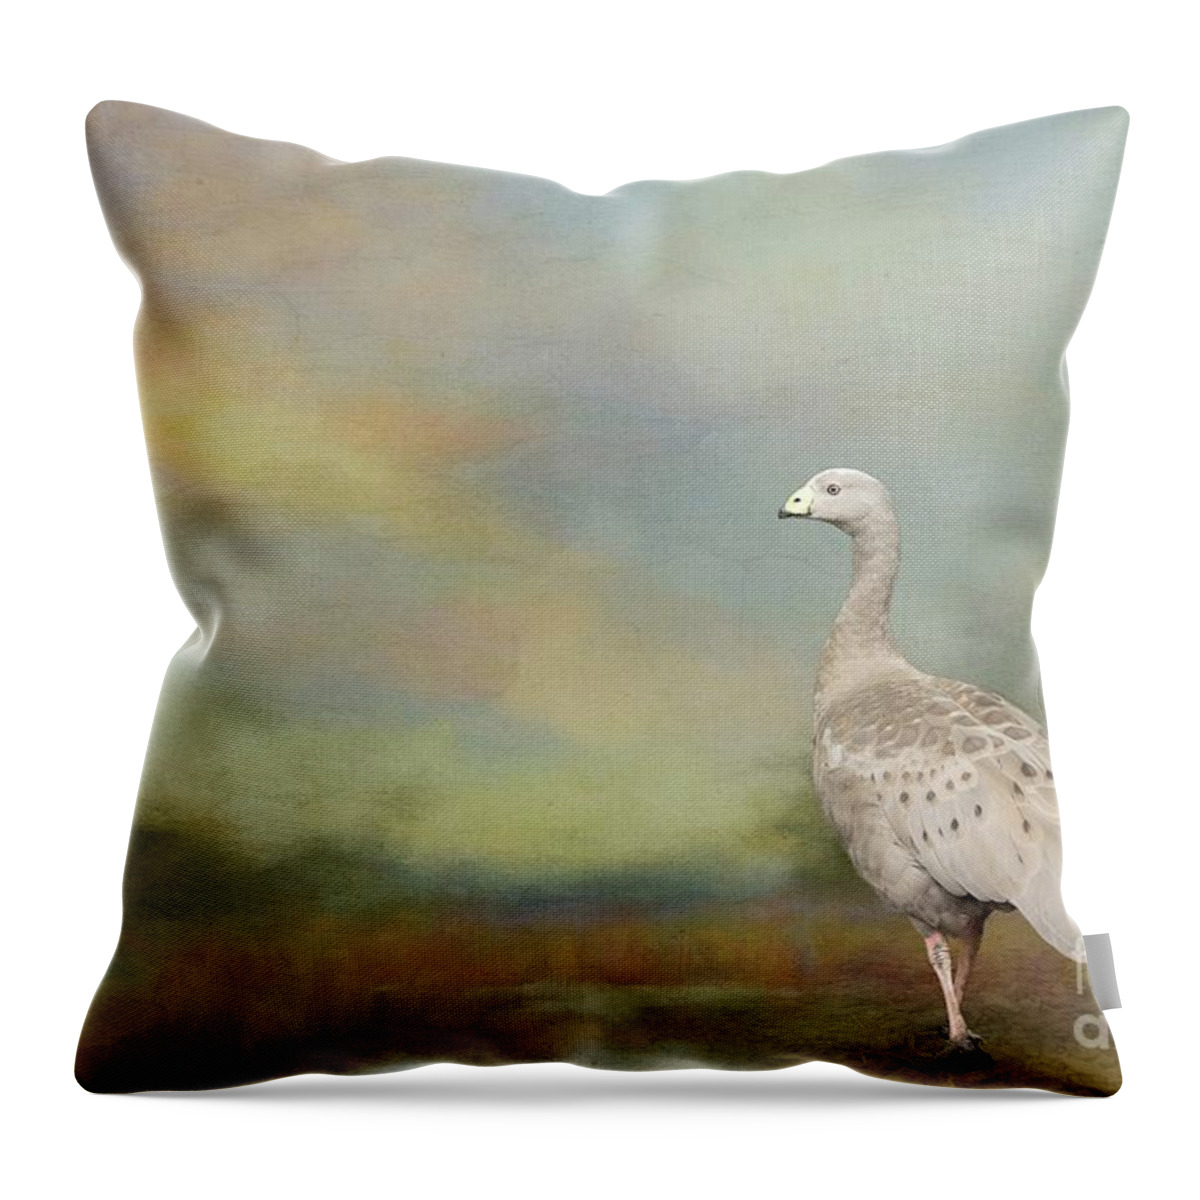 Cape Barren Goose Throw Pillow featuring the photograph Cape Barren Goose by Eva Lechner